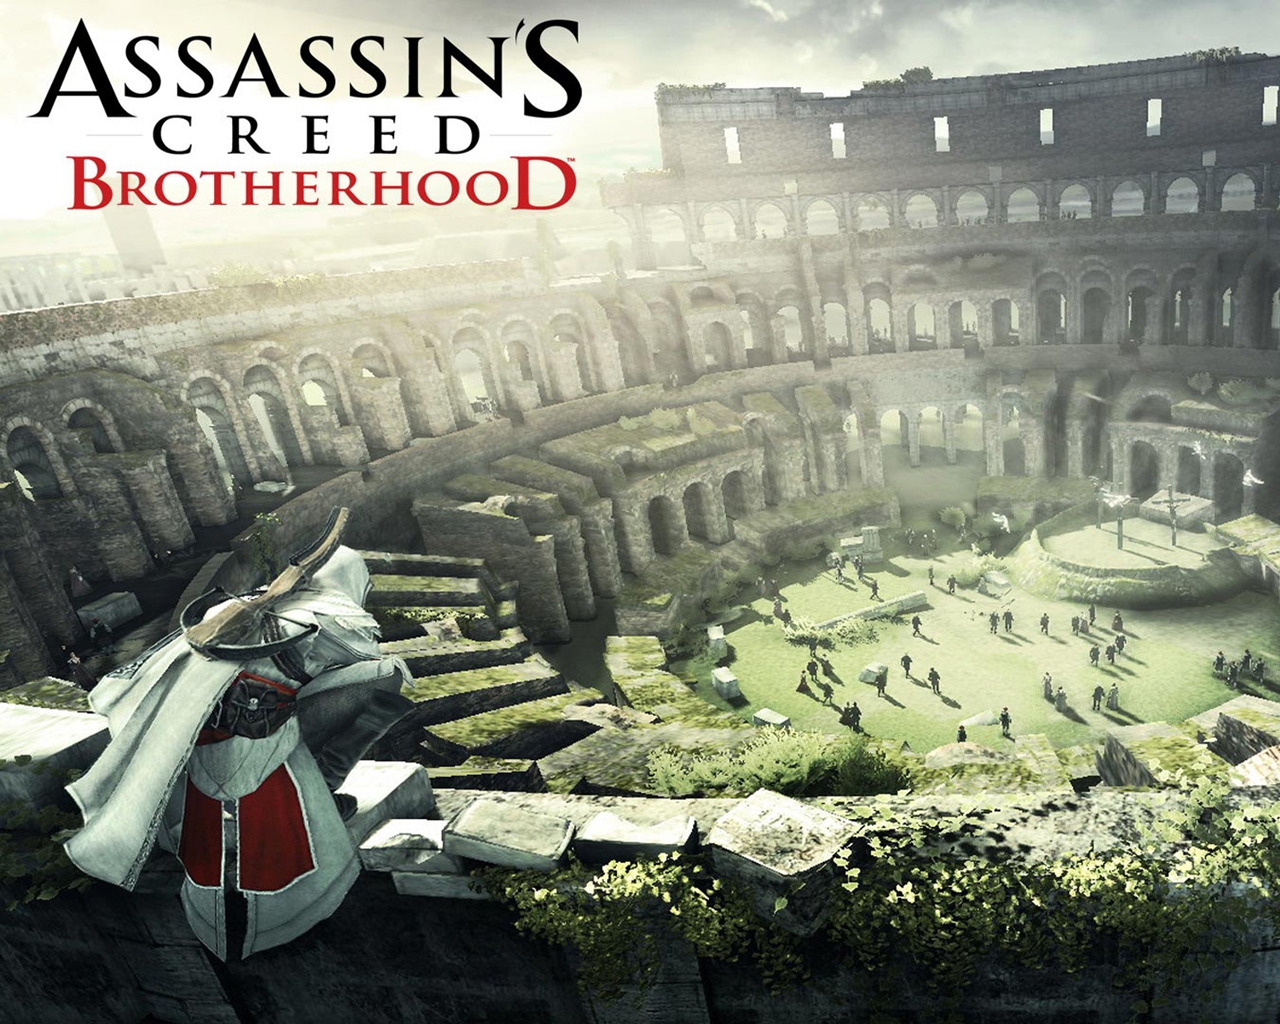 Assassins Creed Brotherhood for 1280 x 1024 resolution